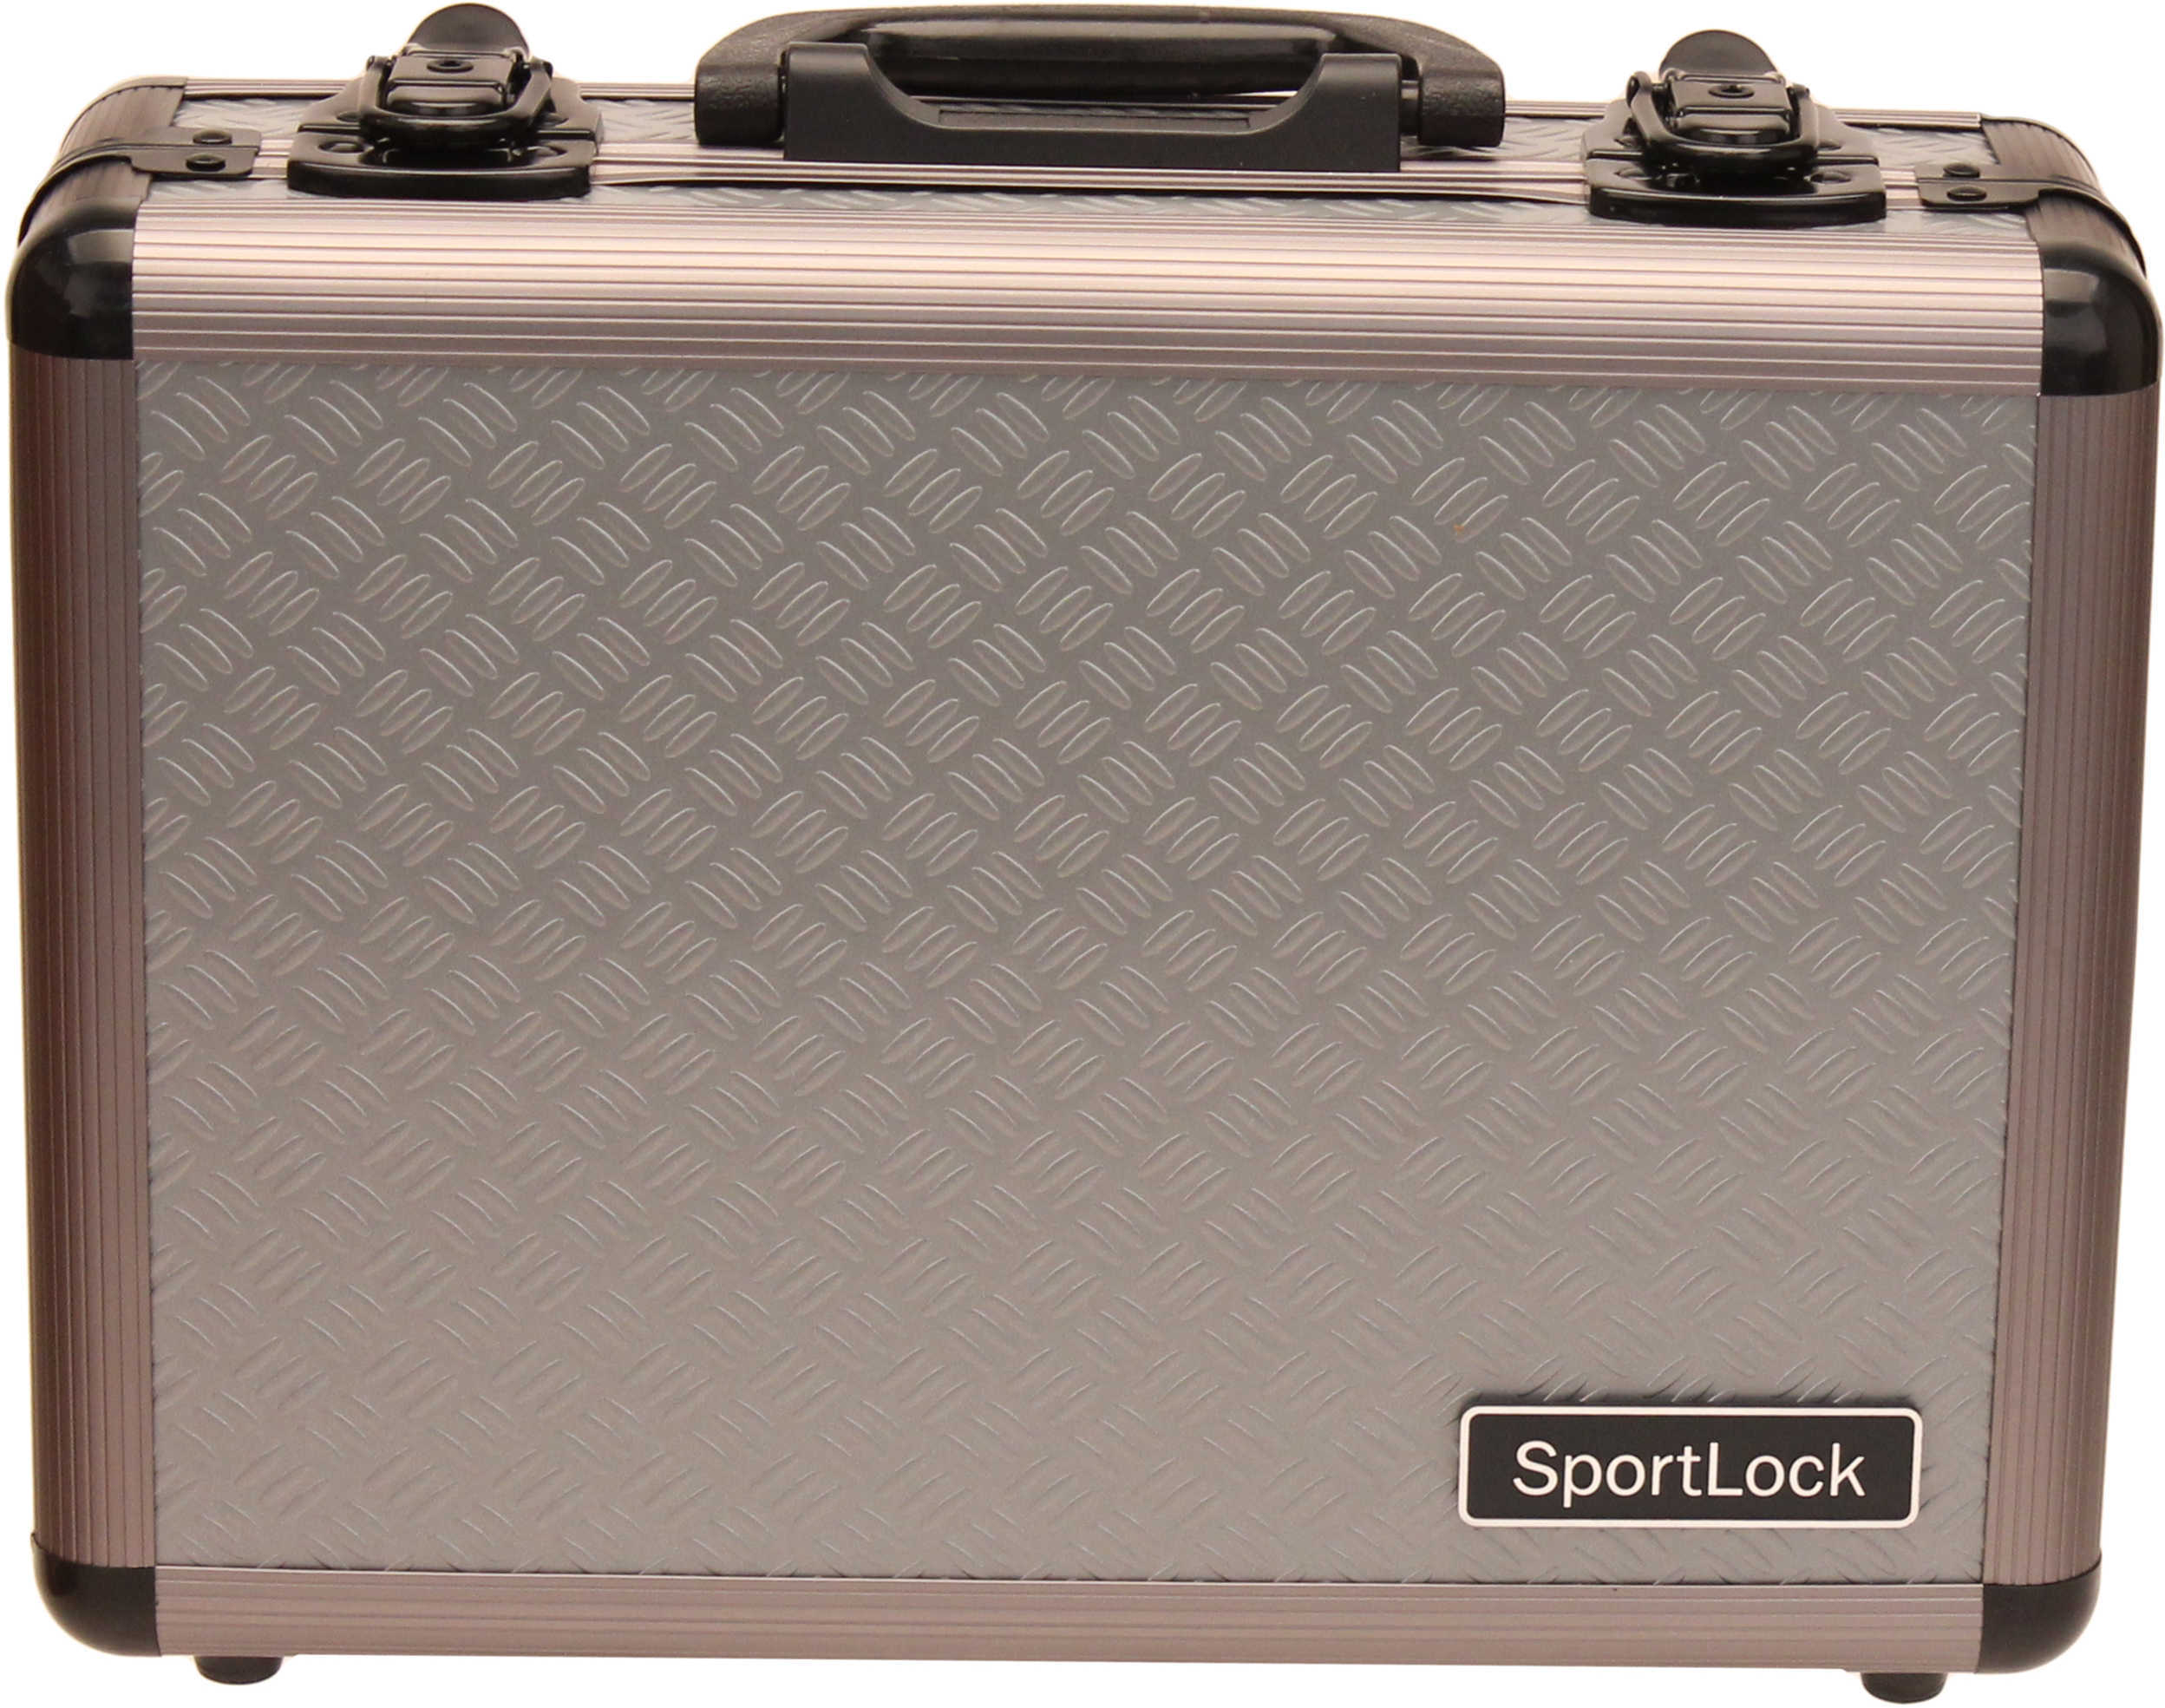 Sportlock ALUMALOCK Case Double Handgun Gray